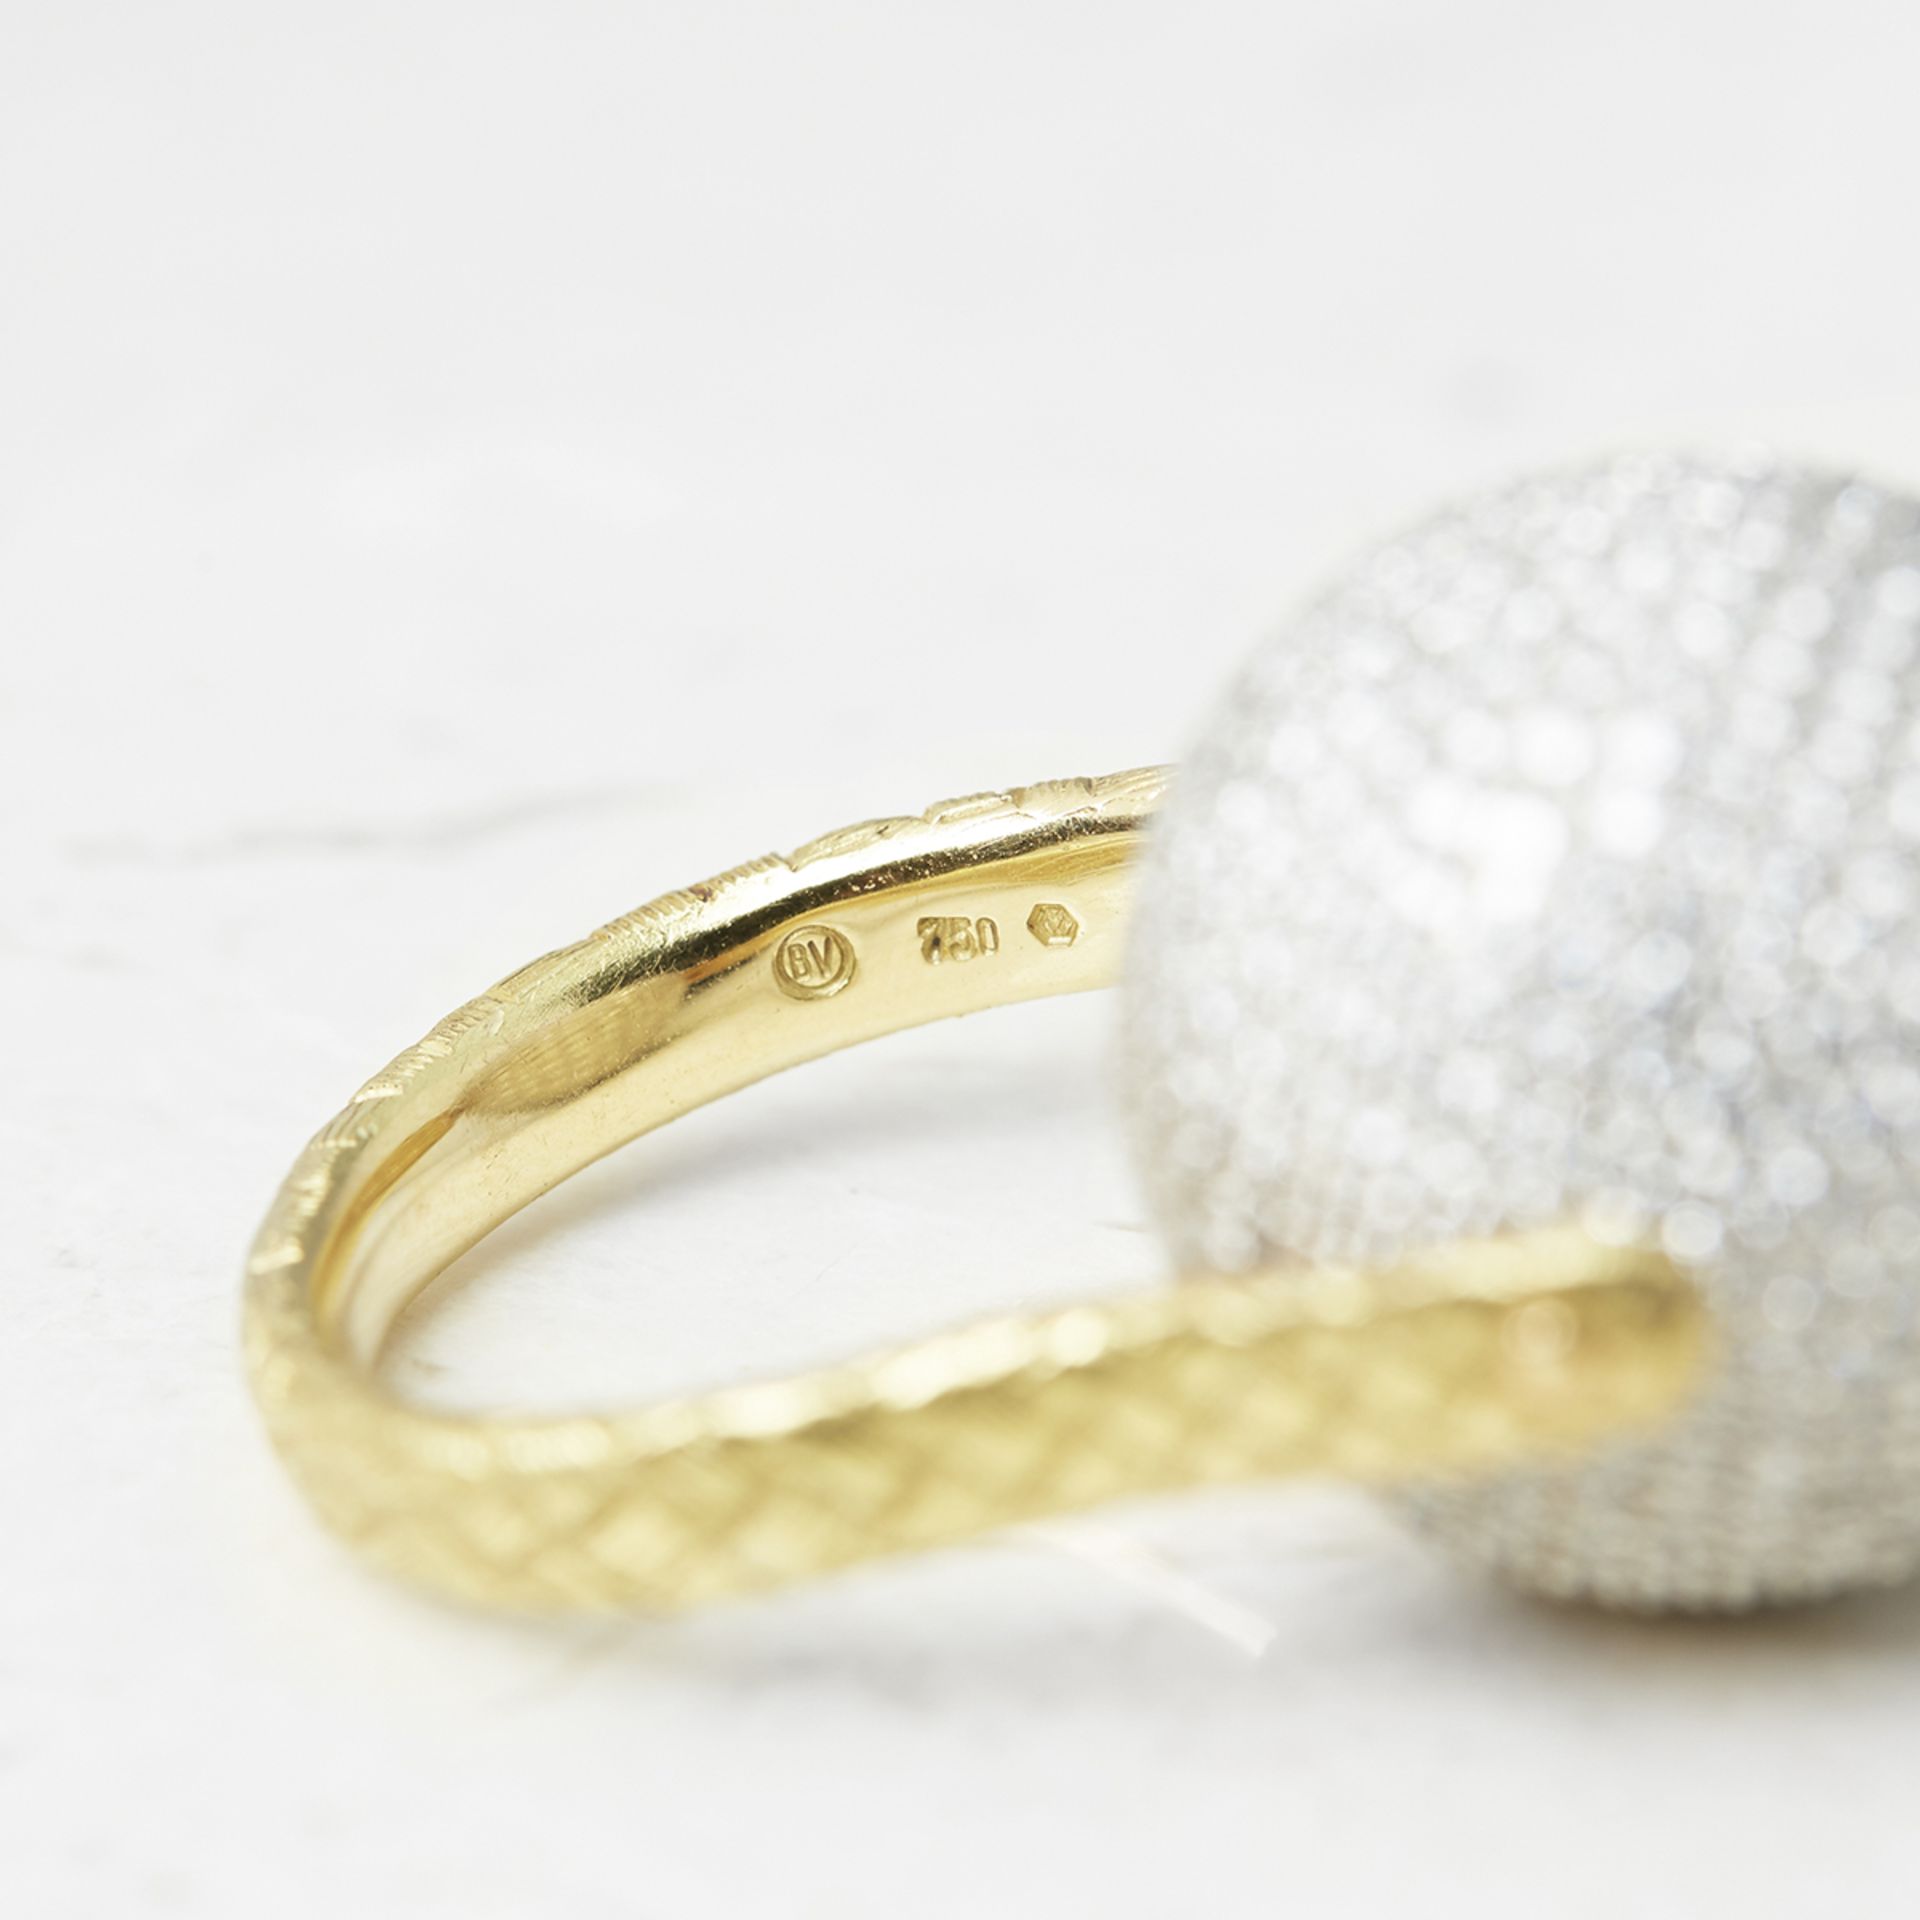 Bottega Veneta 18k Yellow & White Gold Diamond Necklace, Earrings & Ring Sfera Suite - Box & Certs - Image 7 of 21